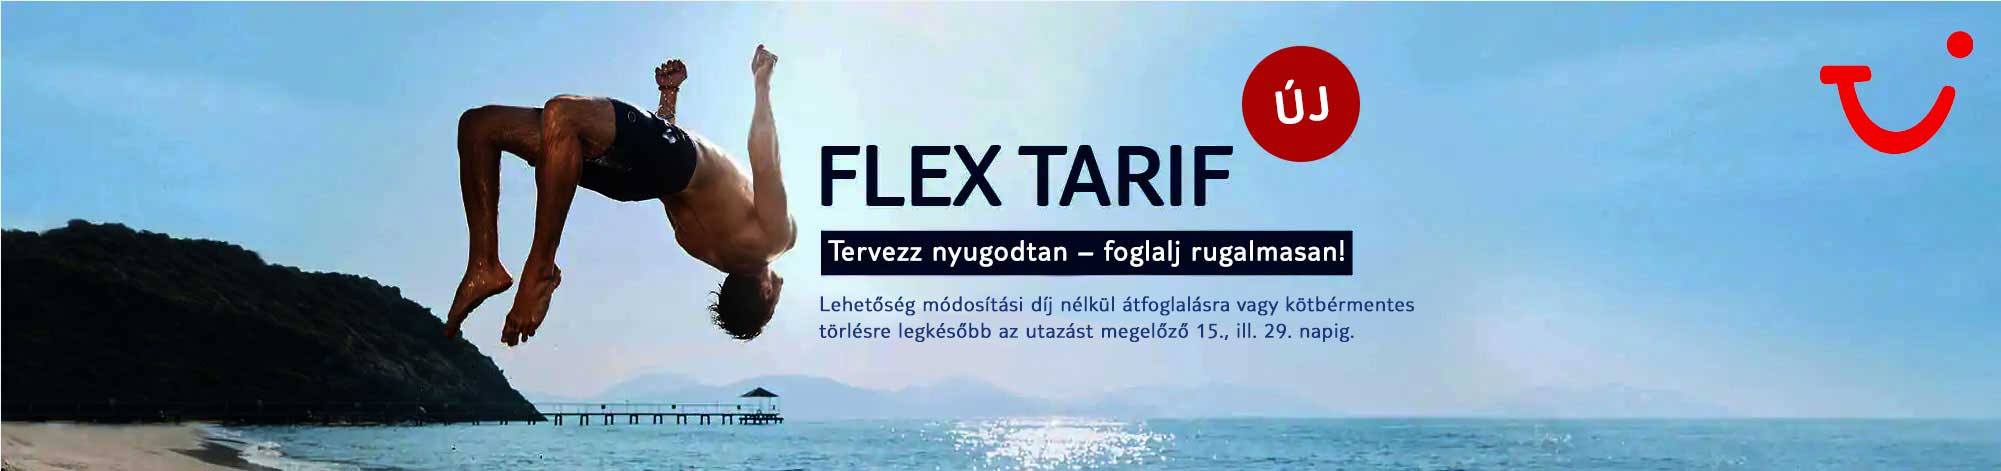 Flex tarif